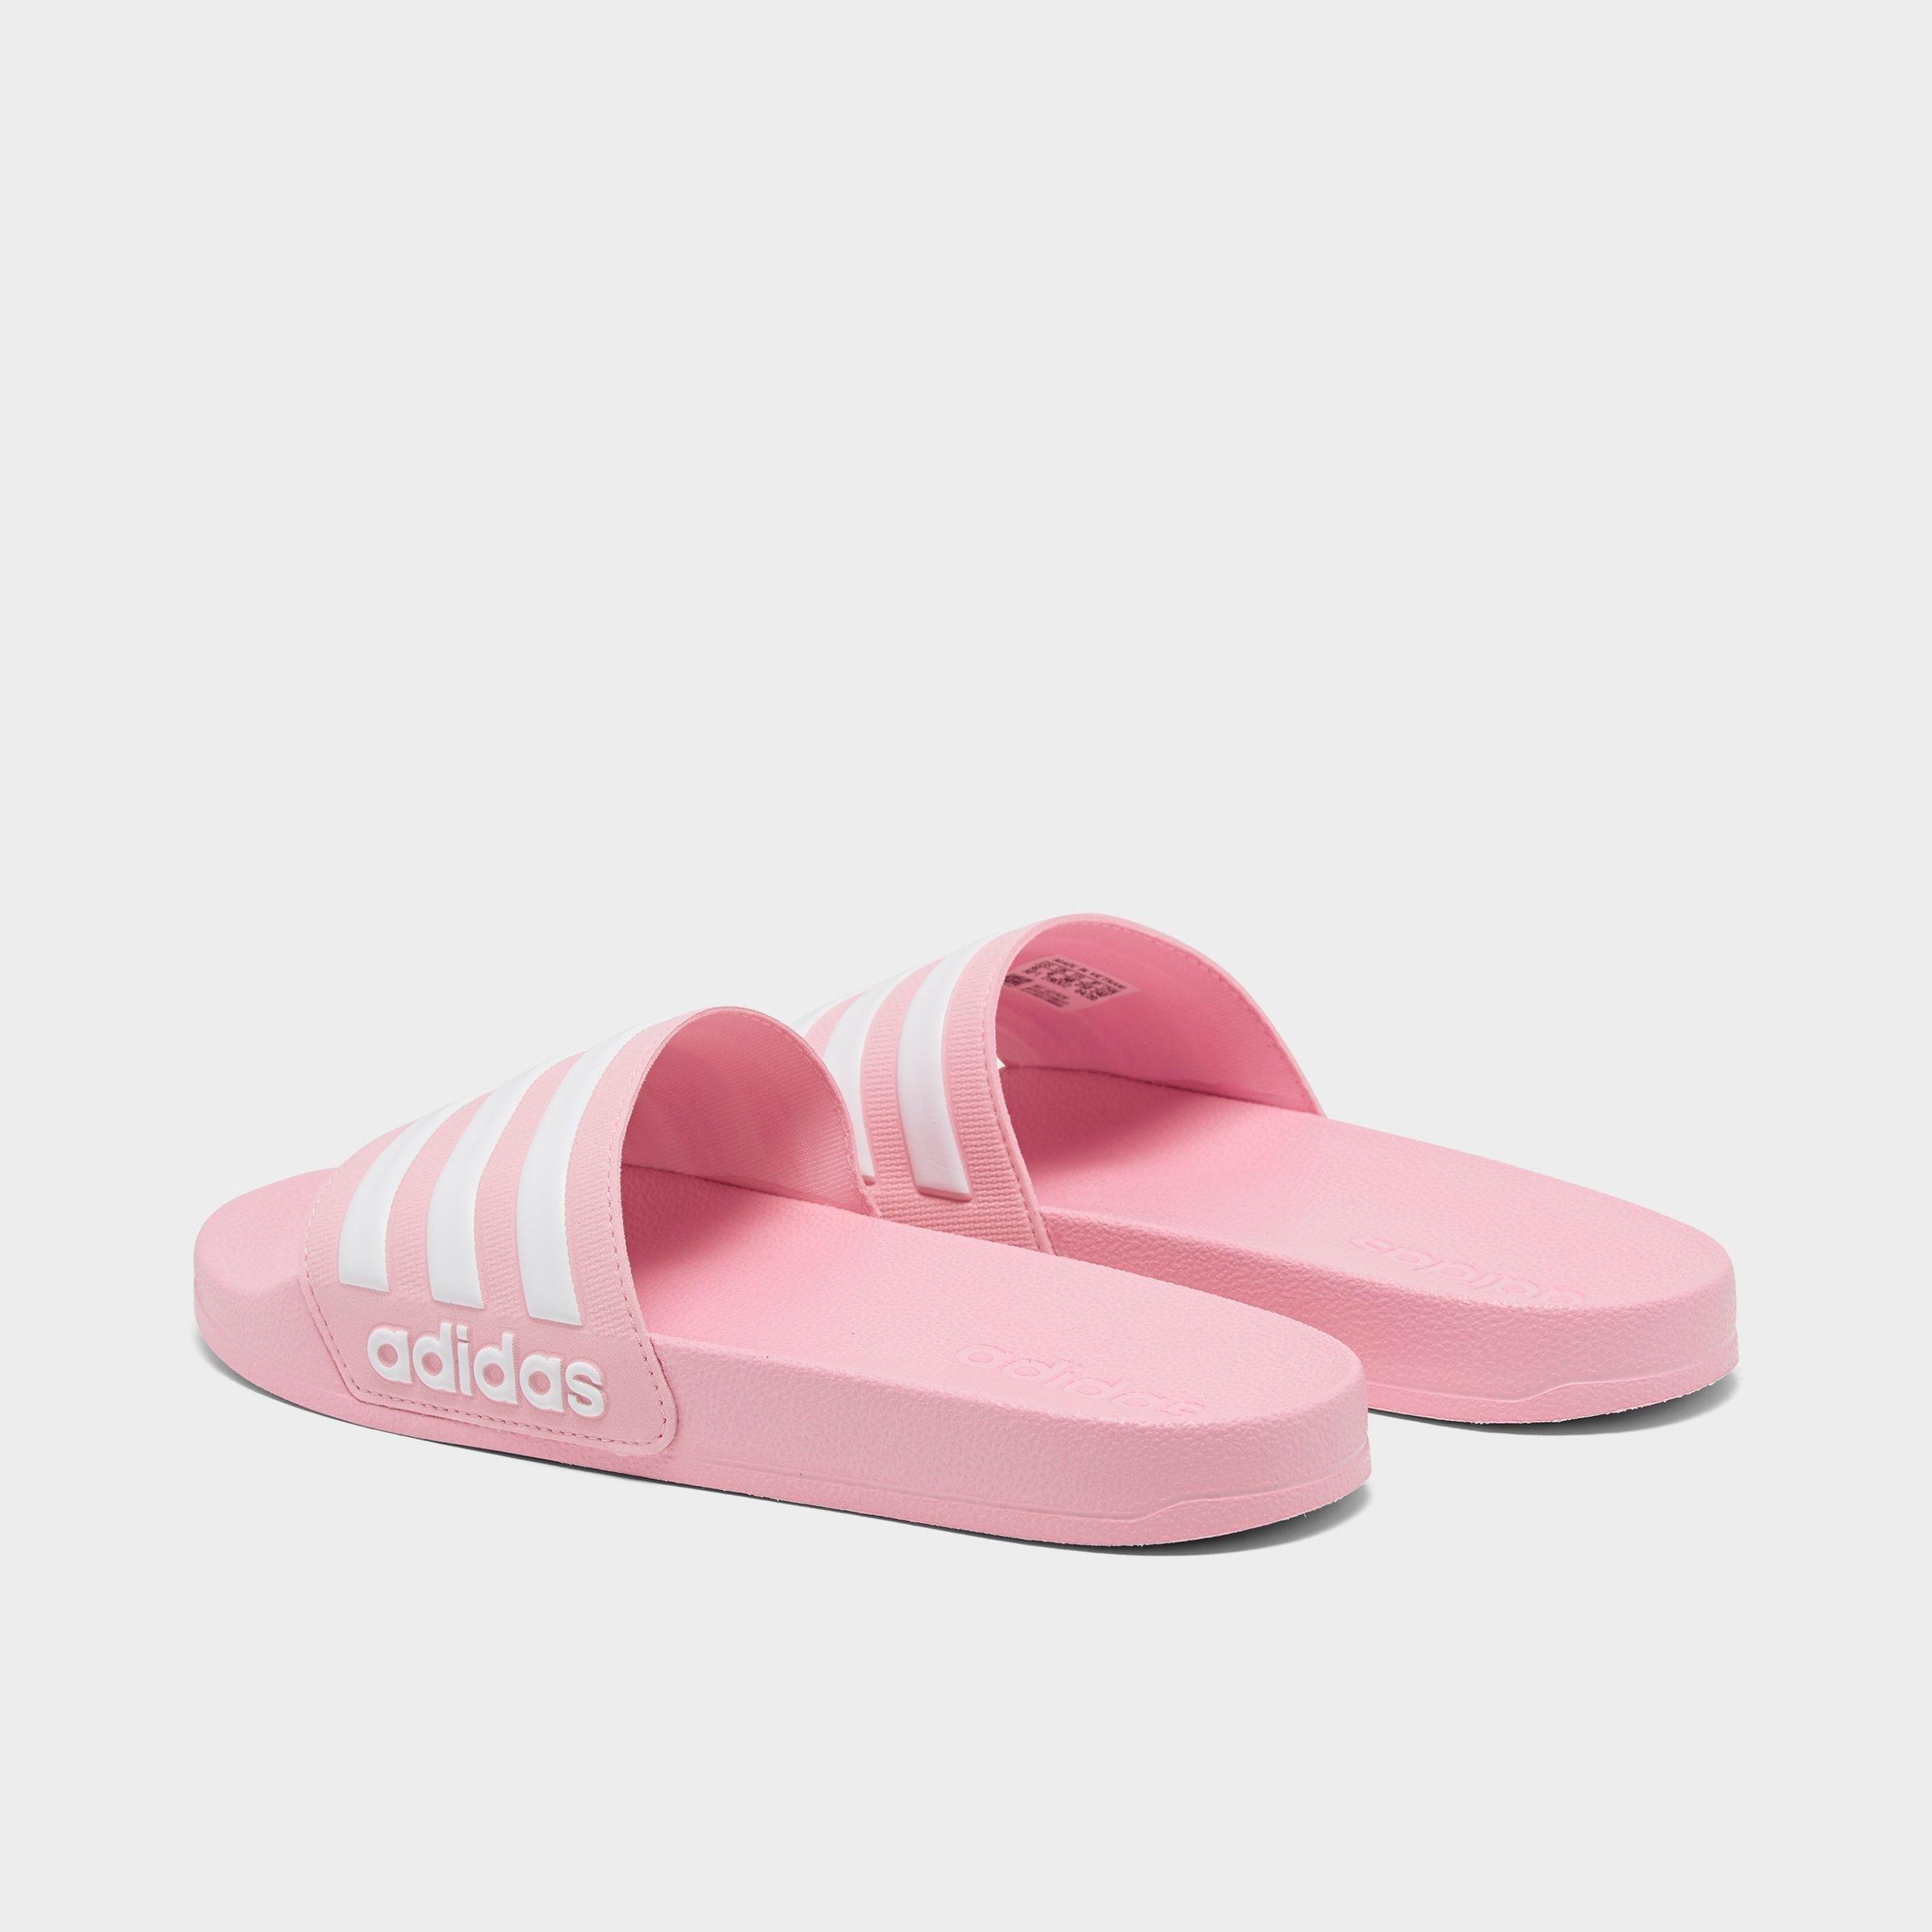 childrens adidas sliders pink